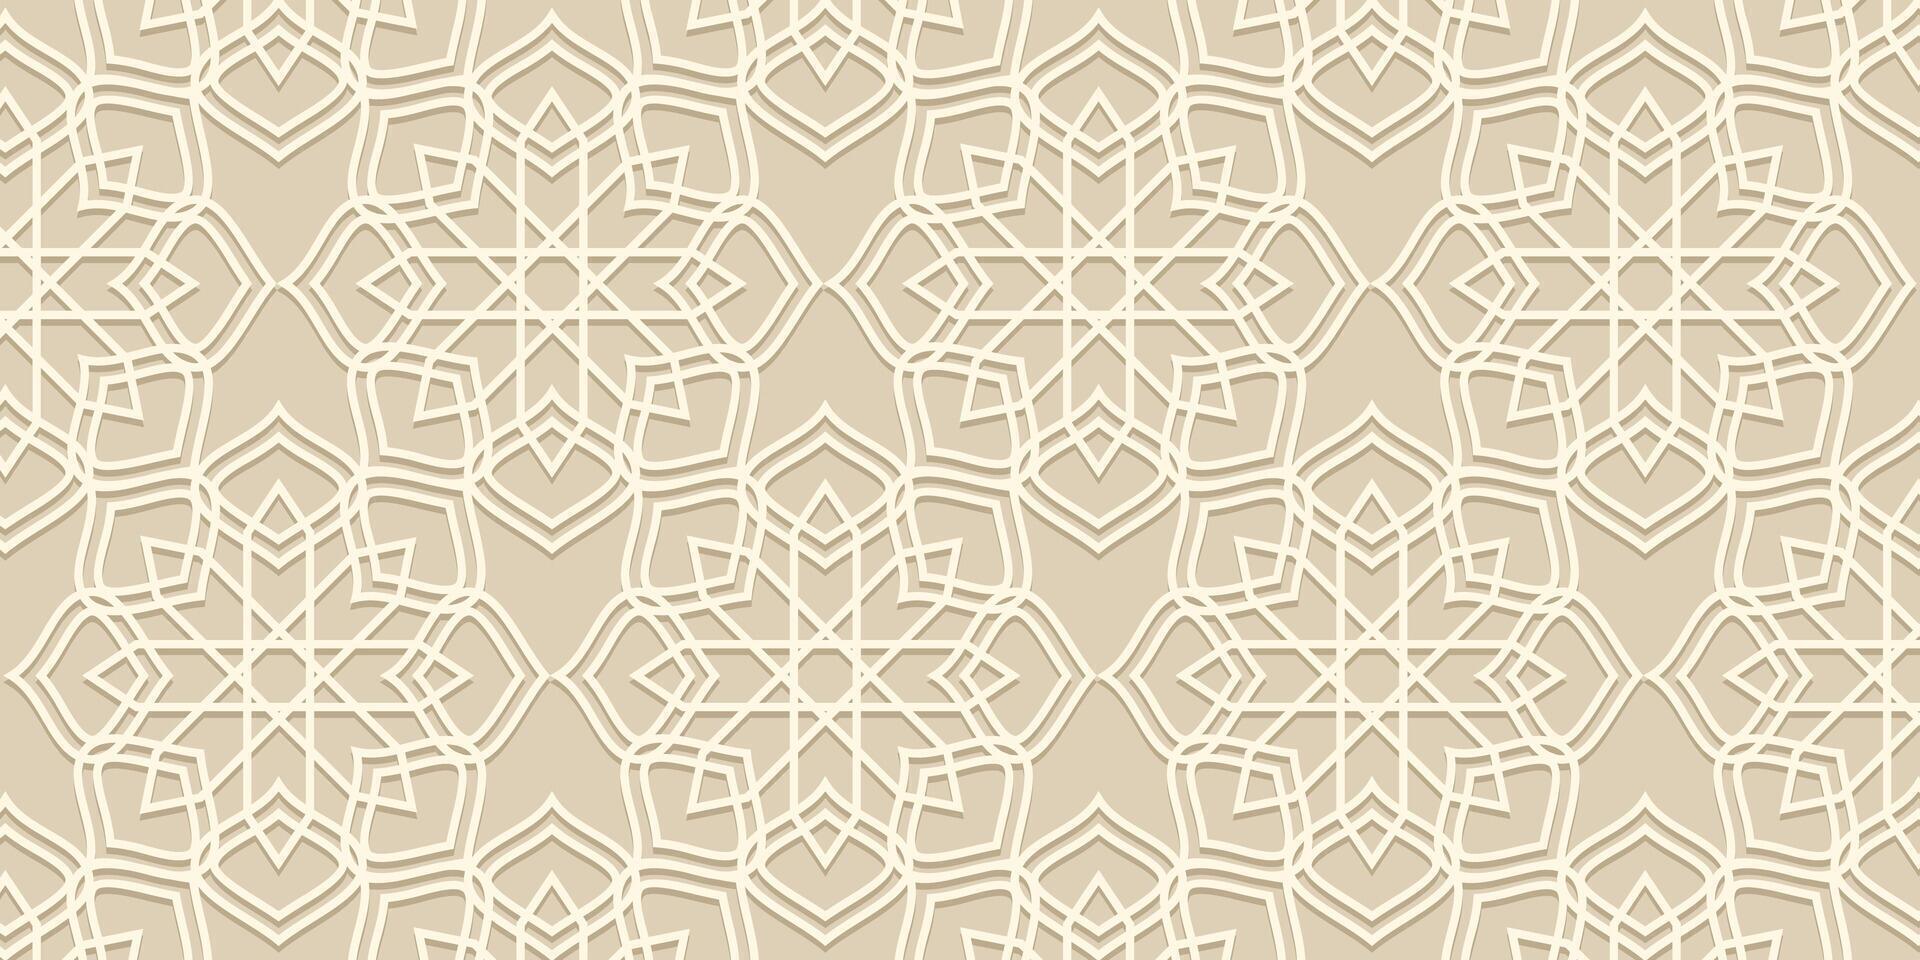 Arabic texture pattern background. geometric vector ornament for banners, posters, social media, greeting cards for Islamic holidays, Eid al-Fitr, Ramadan, Eid al-Adha.